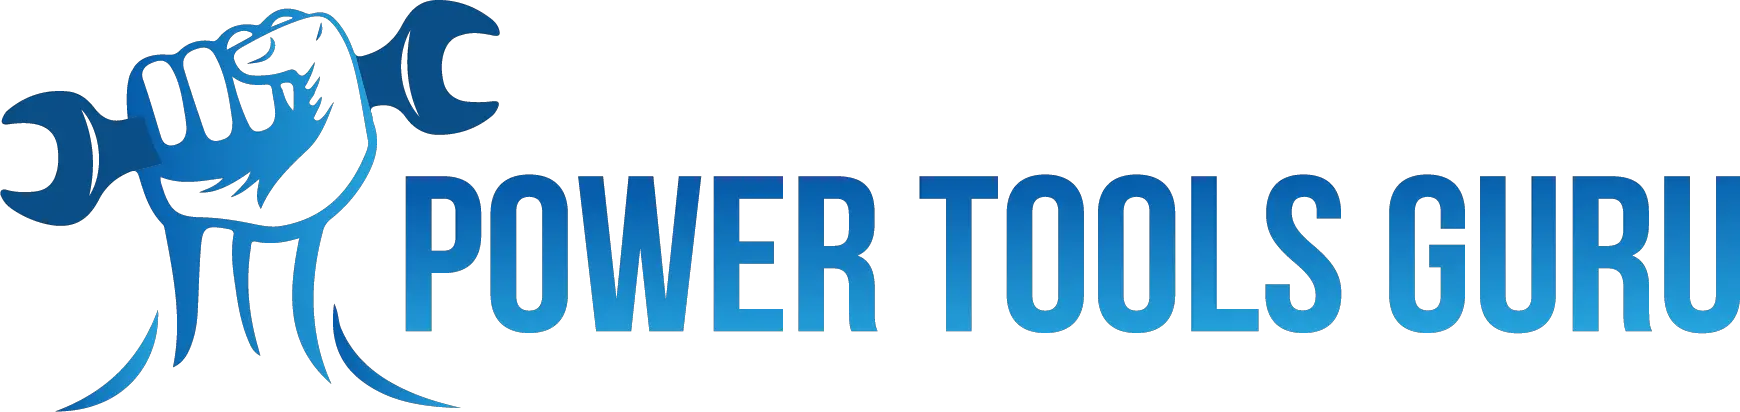 Power Tools Guru logo